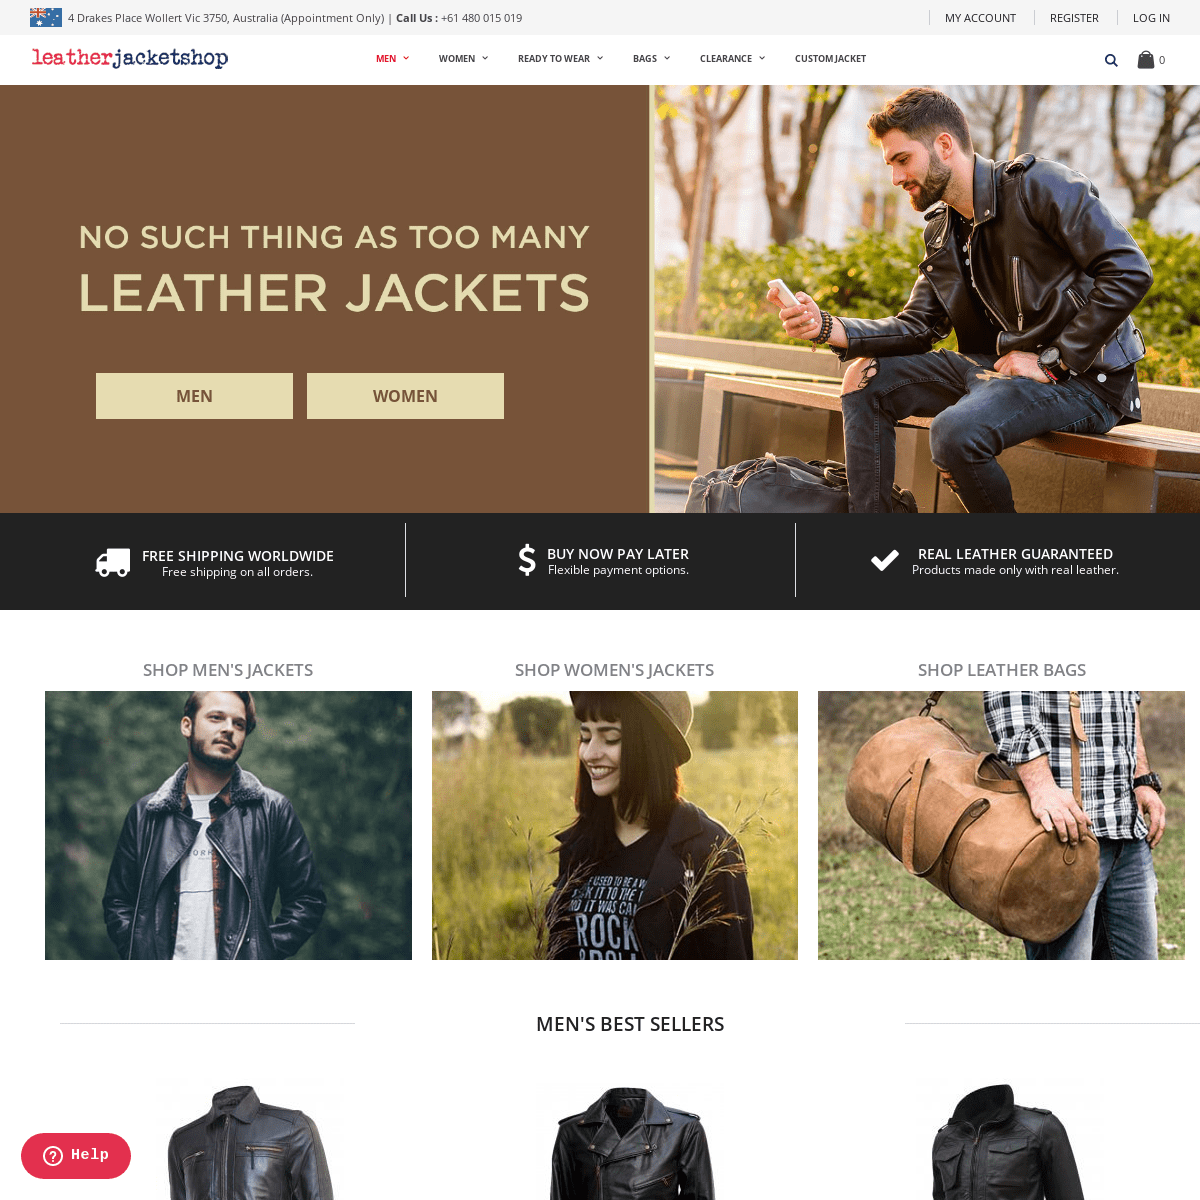 A complete backup of leatherjacketshop.com.au